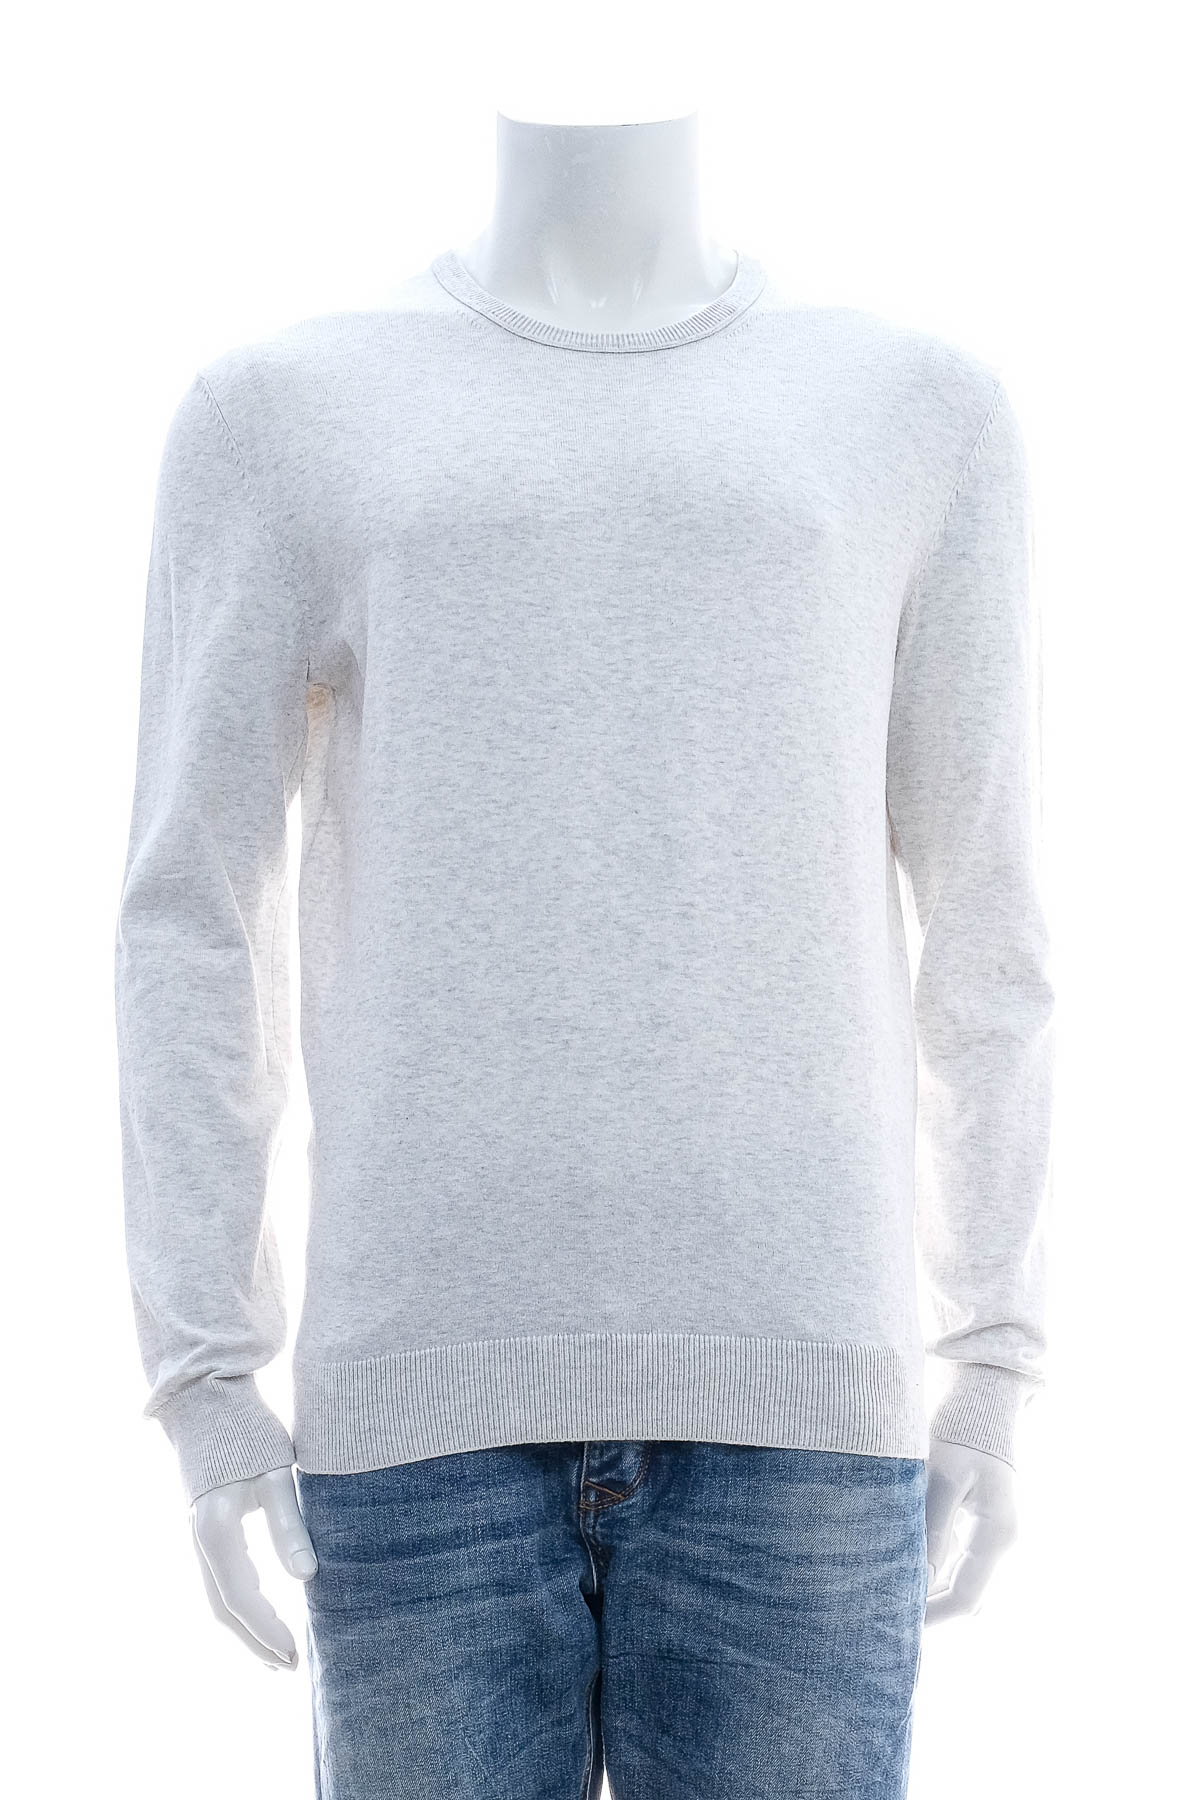 Men's sweater - Fundamentals - 0